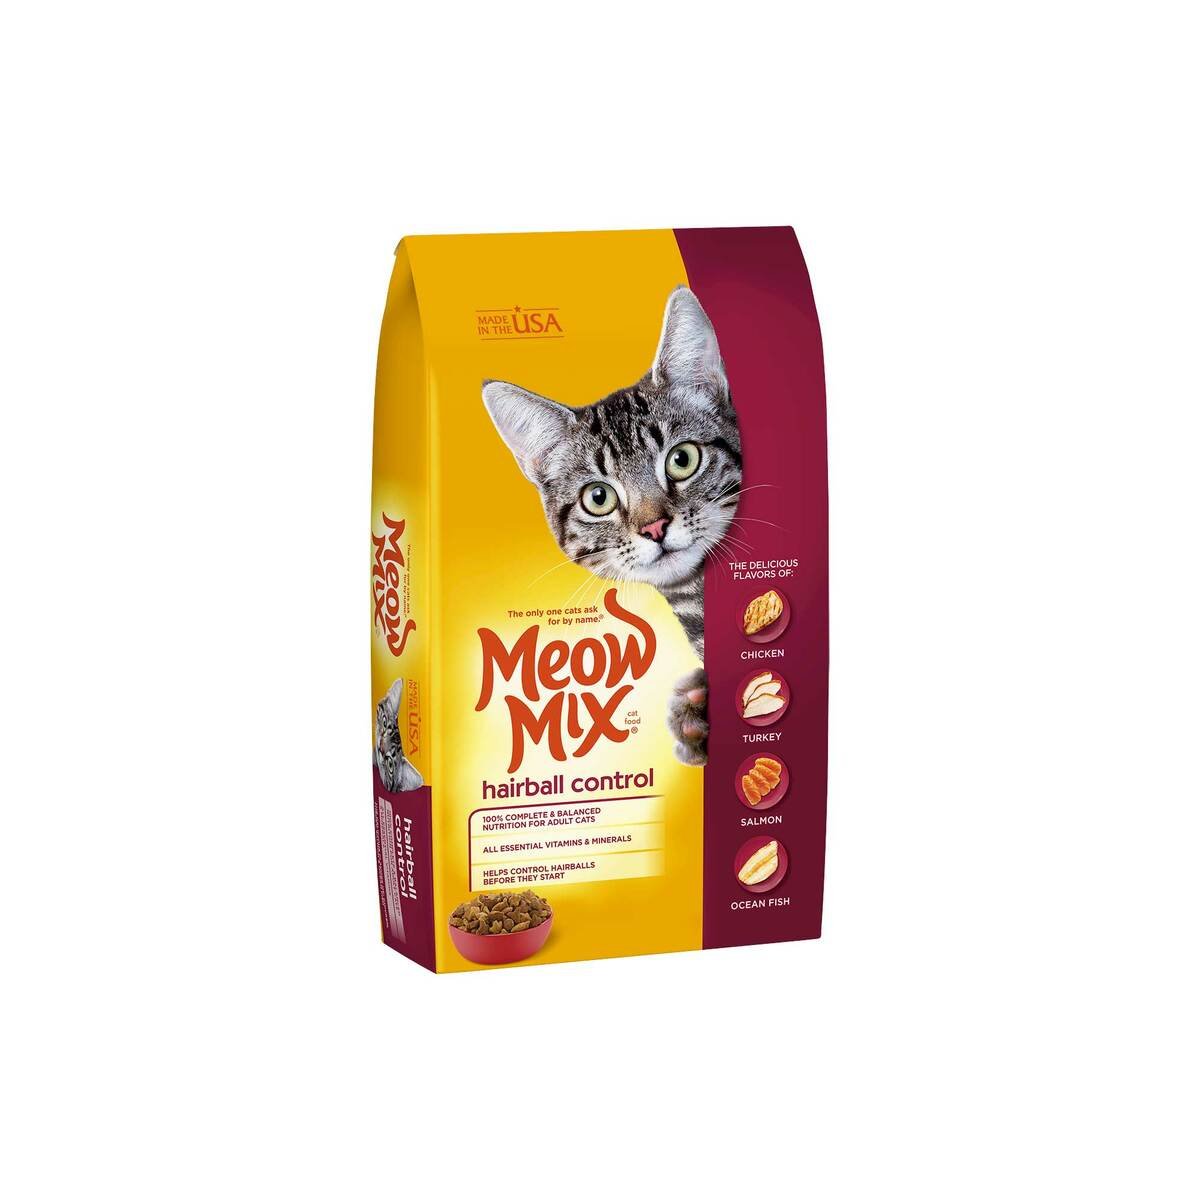 مياو ميكس هيربول كنترول طعام قطط مجفف 1.43 كجم